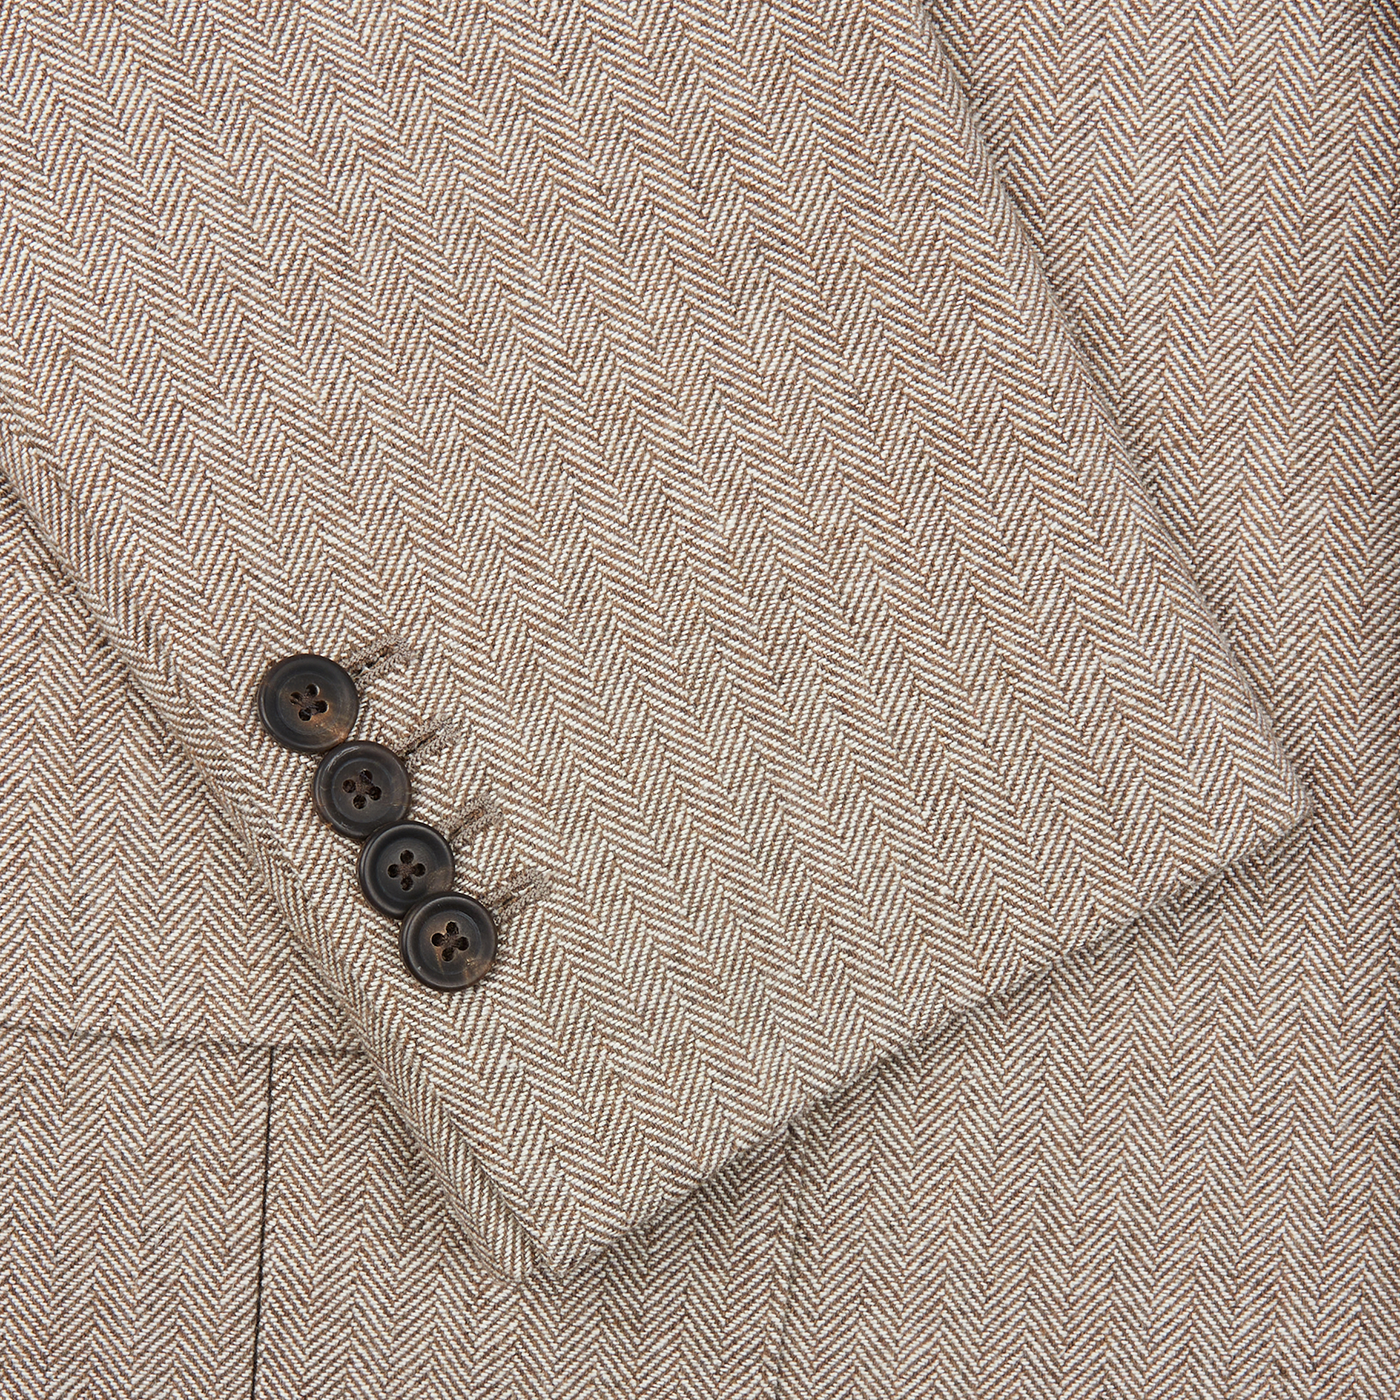 A close up of a Beige Herringbone Wool Linen Provence Jacket by Alexander Kraft Monte Carlo.